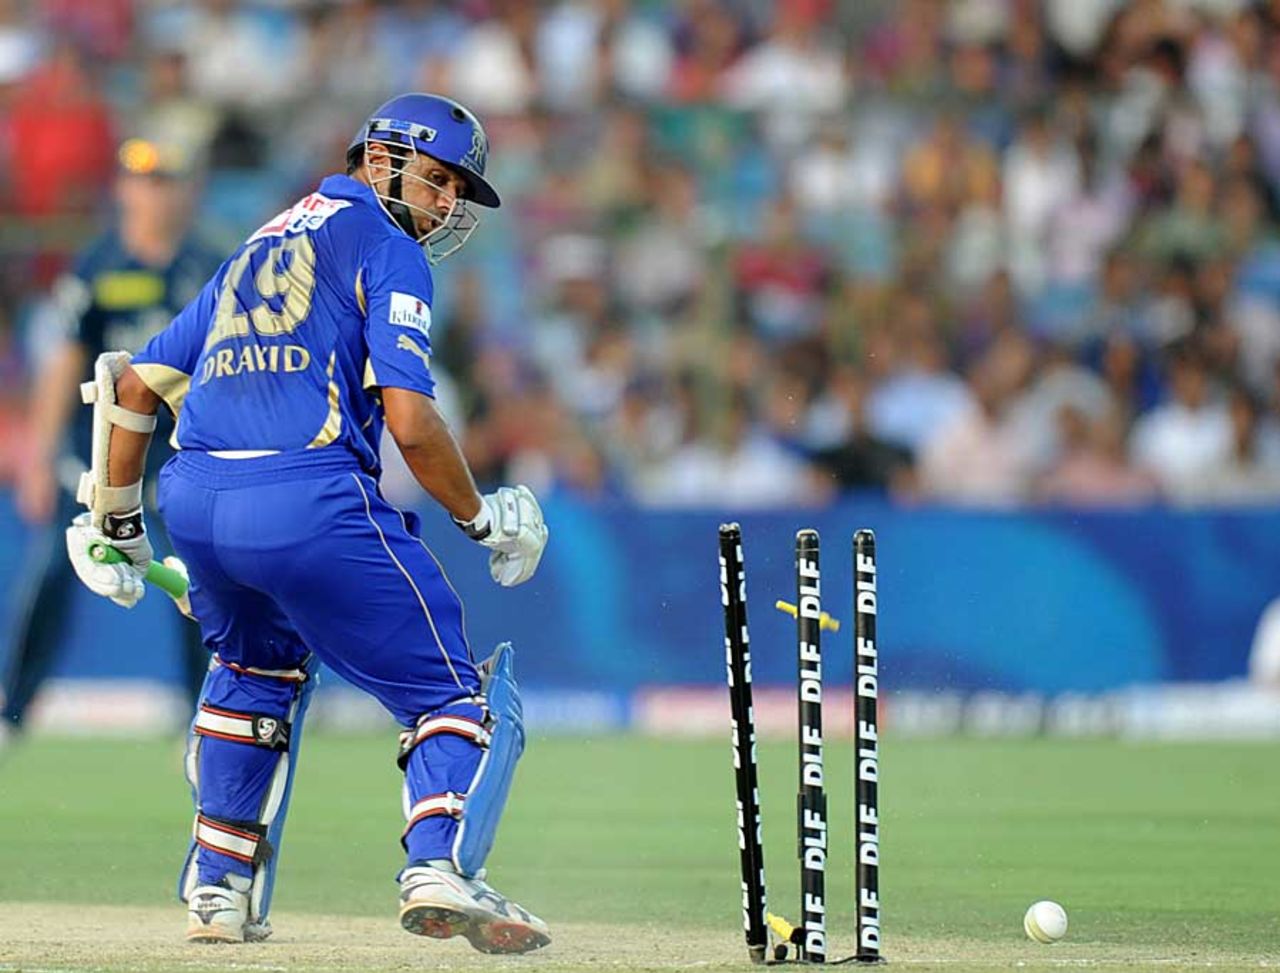 Rahul Dravid was bowled by Daniel Christian, Rajasthan Royals v Deccan Chargers, IPL 2012, Jaipur, April 17, 2012